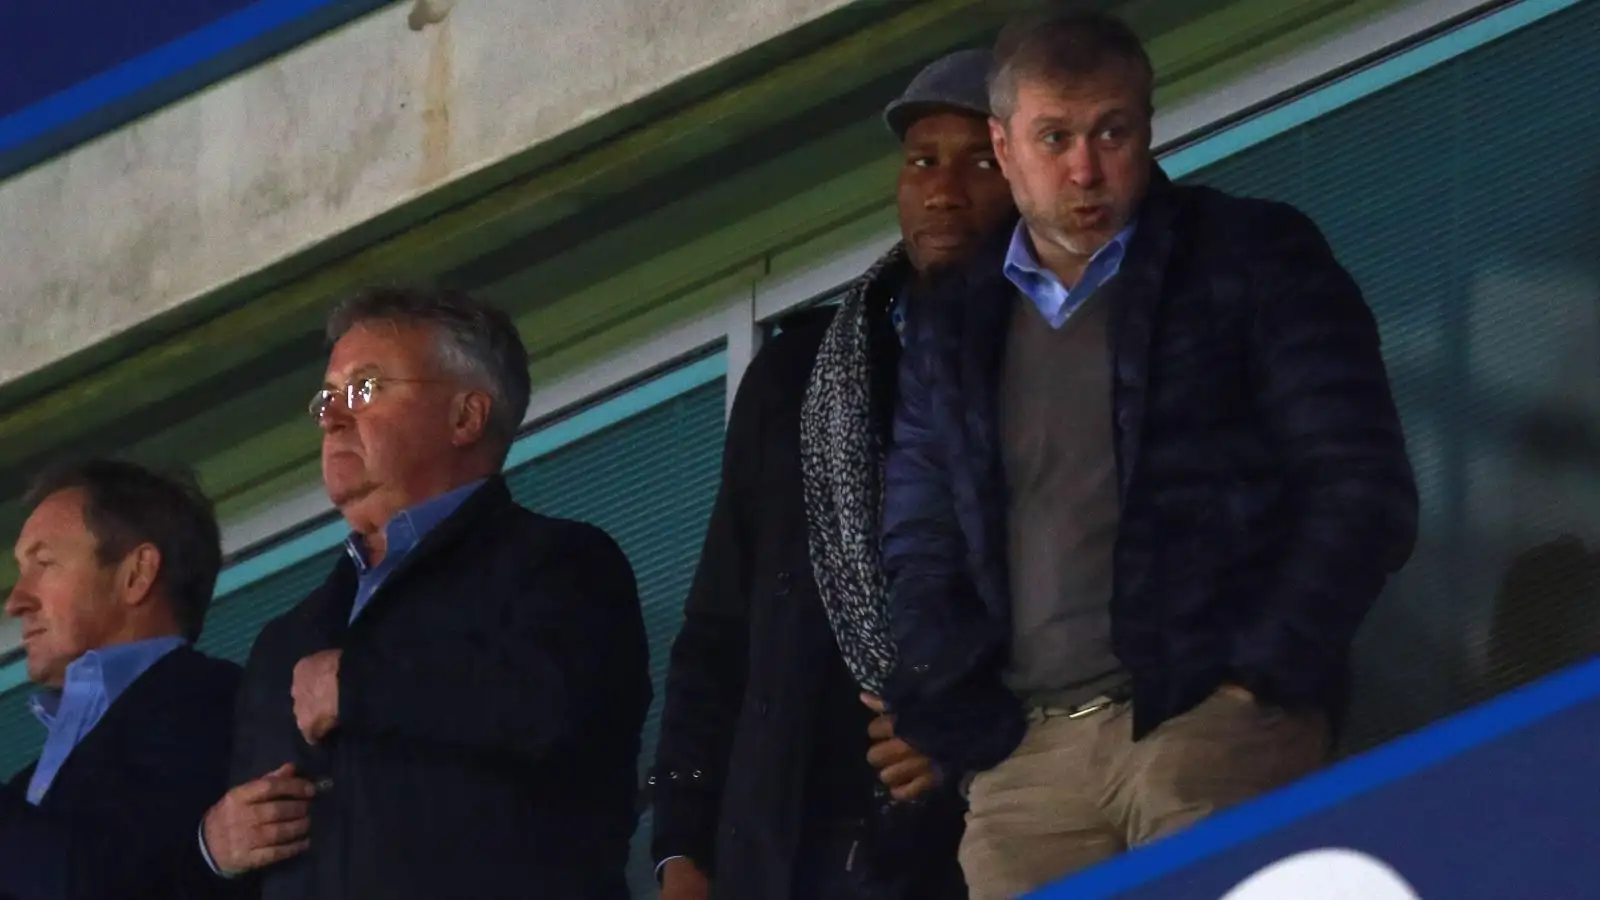 Former Chelsea striker Didier Drogba and Roman Abramovich